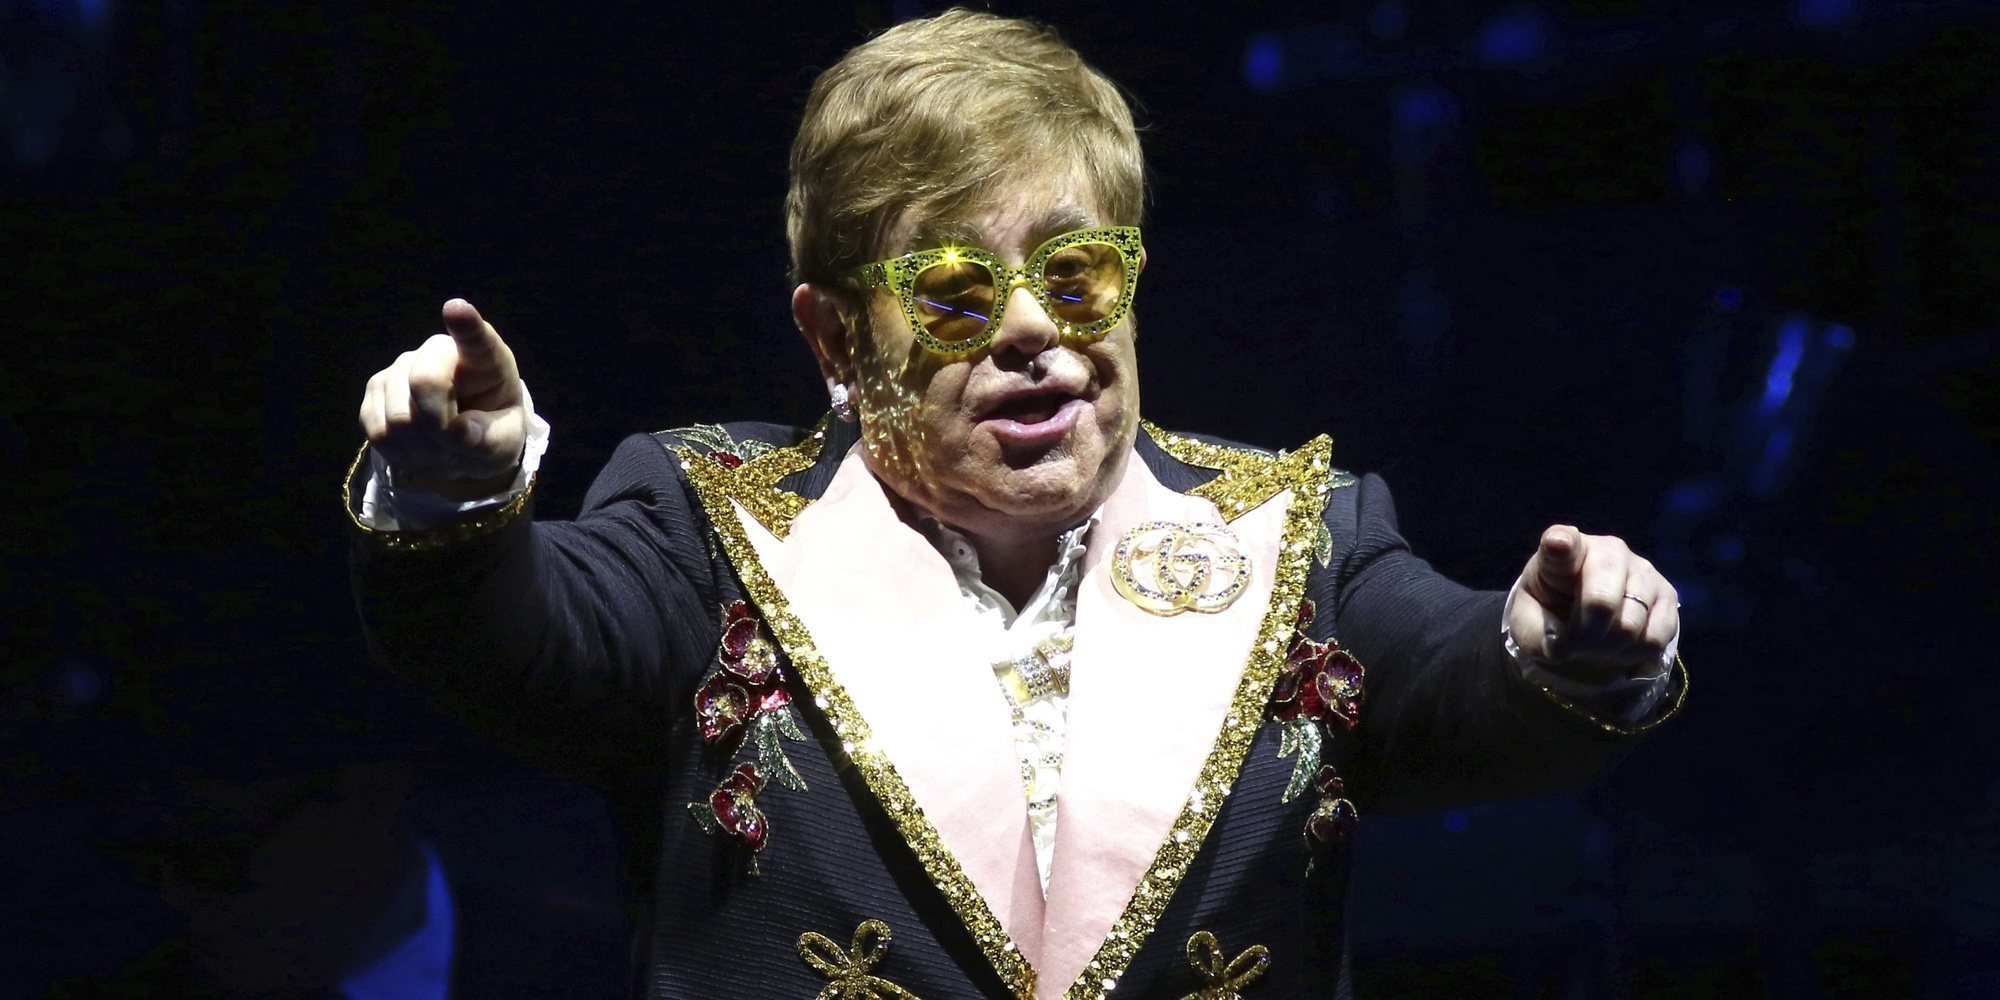 Elton John revela que sufrió cáncer de próstata: "Los médicos dijeron que me quedaban 24 horas"